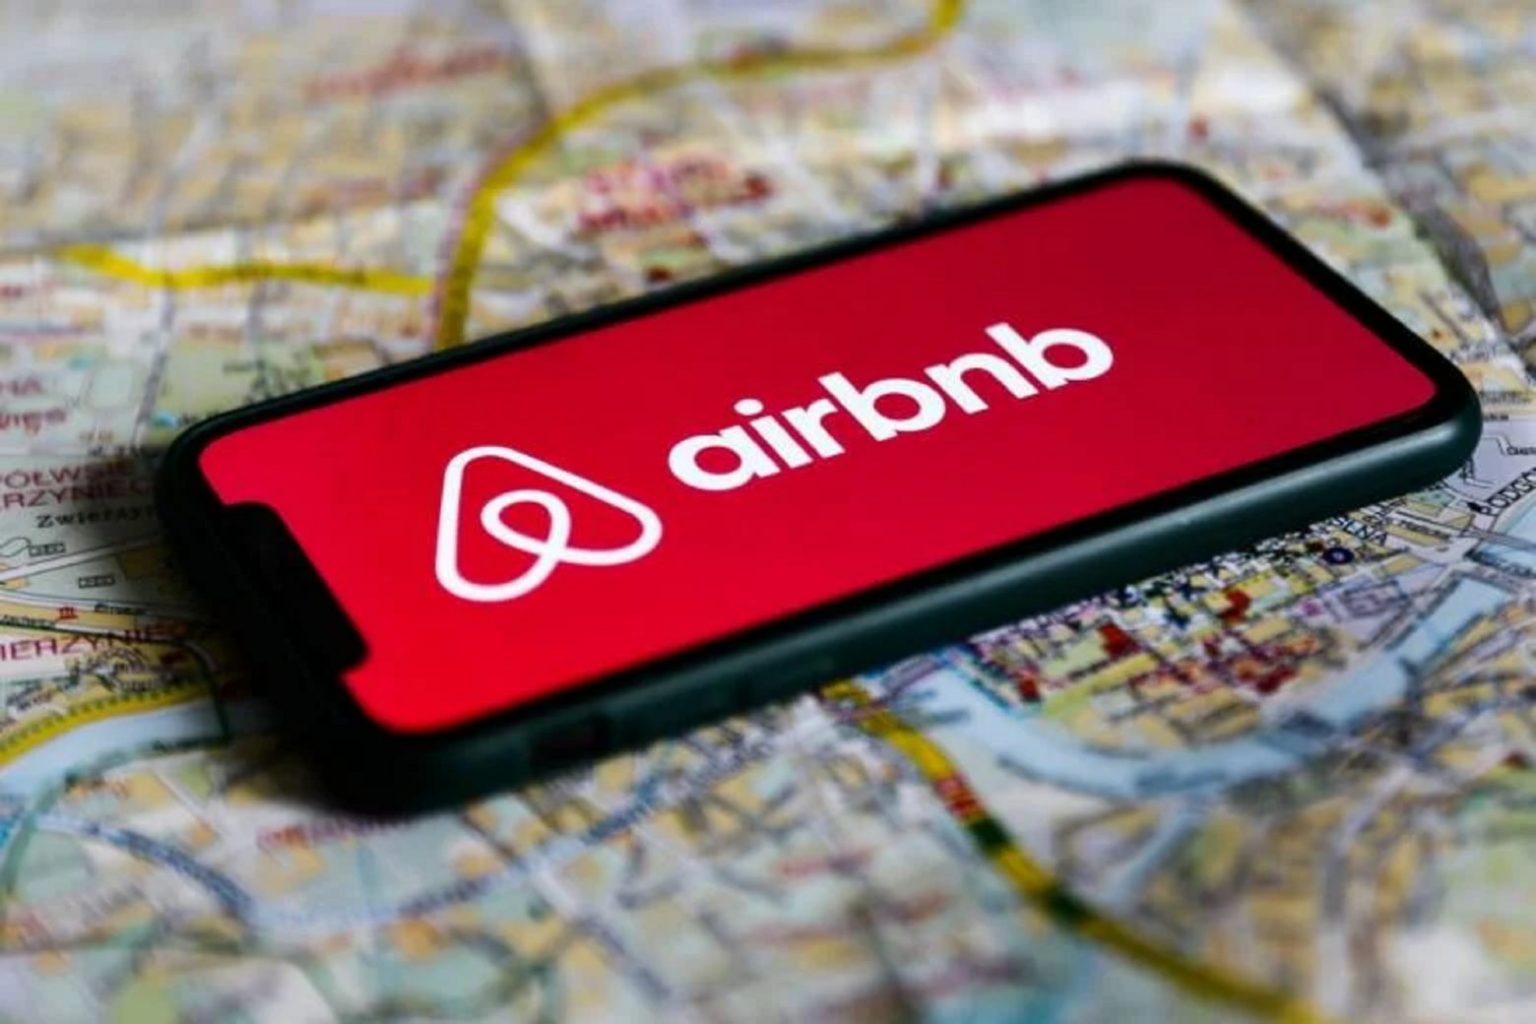 Airbnb: Πώς το φορολογικό νομοσχέδιο επηρεάζει τους μικρούς και μεγάλους ιδιοκτήτες ακινήτων